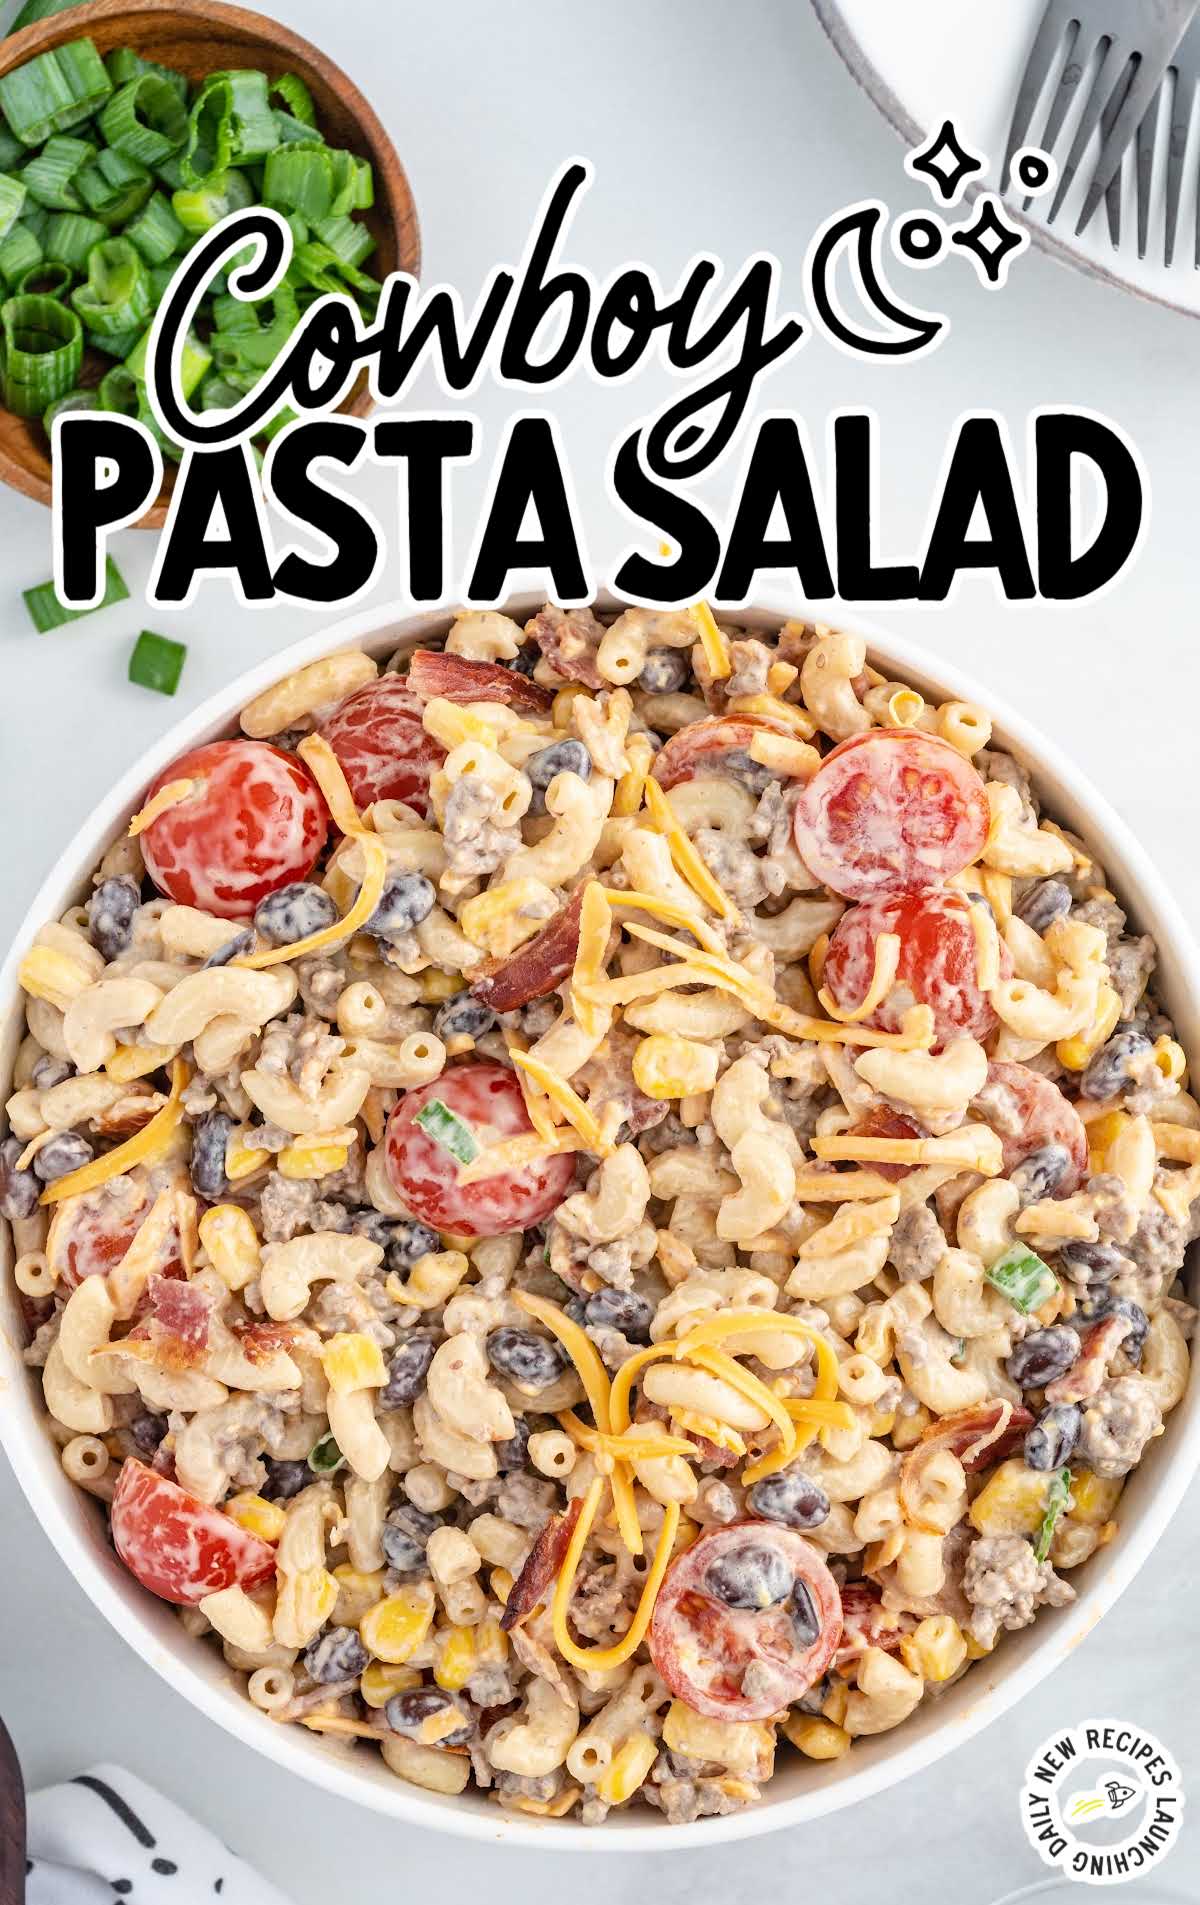 Cowboy Pasta Salad in a bowl